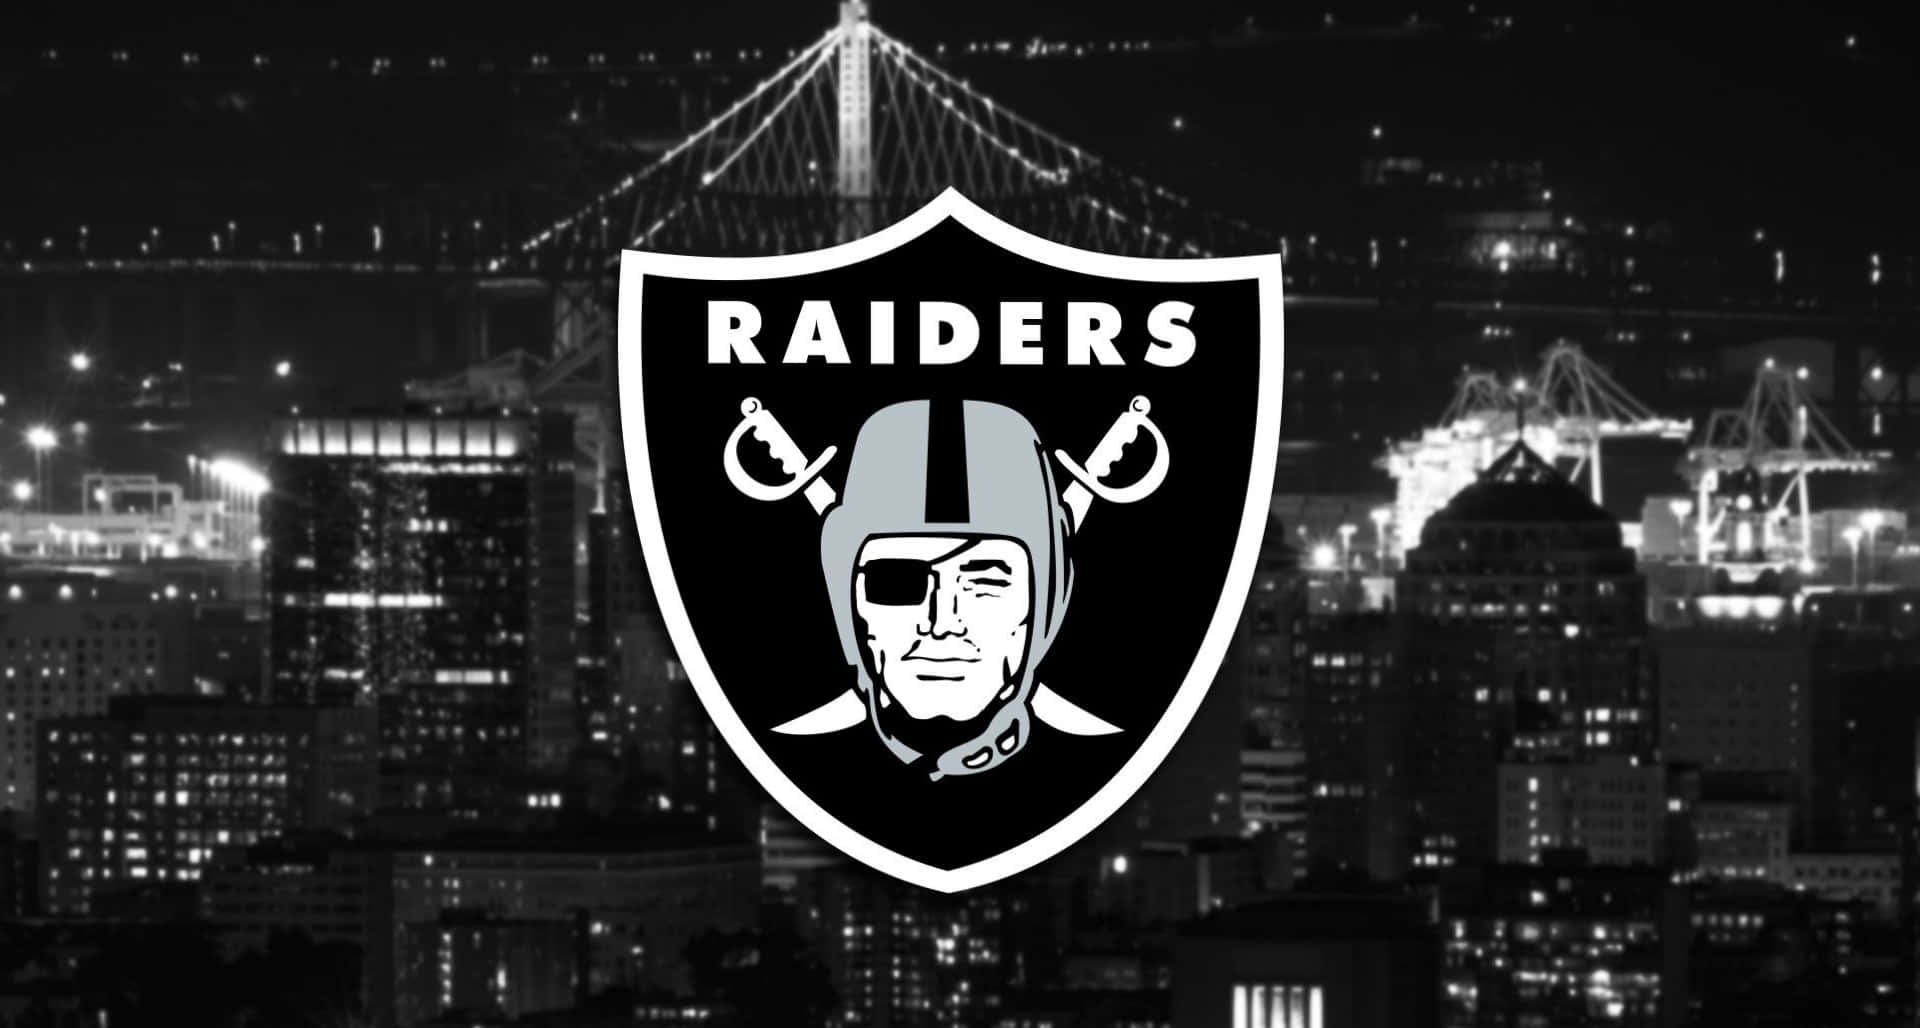 Raiders Logo On Night Cityscape Wallpaper